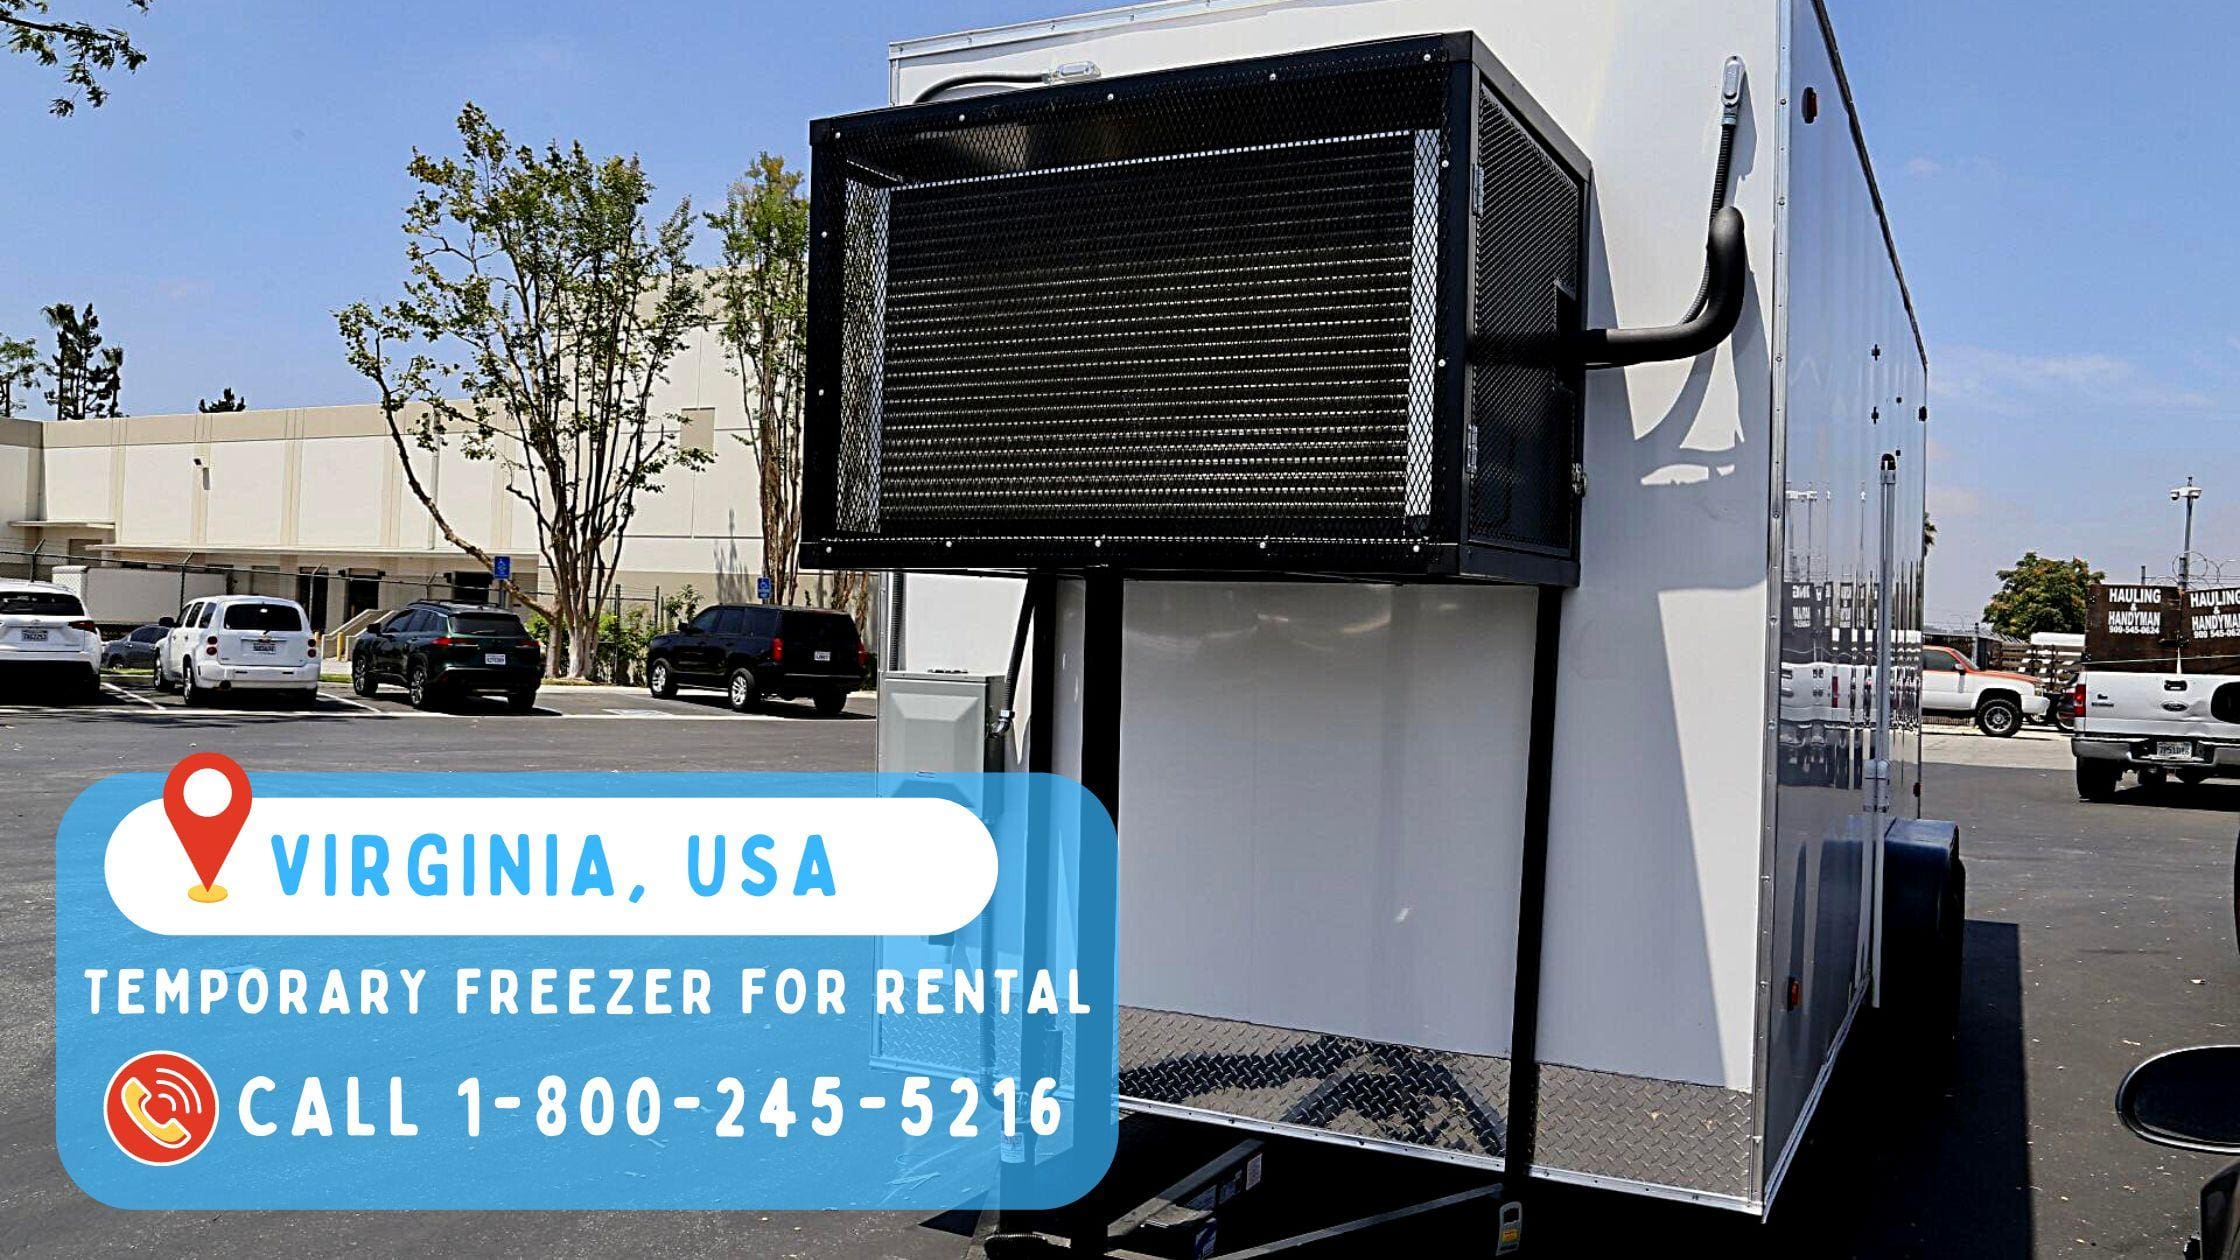 Temporary freezer for rental in Virginia